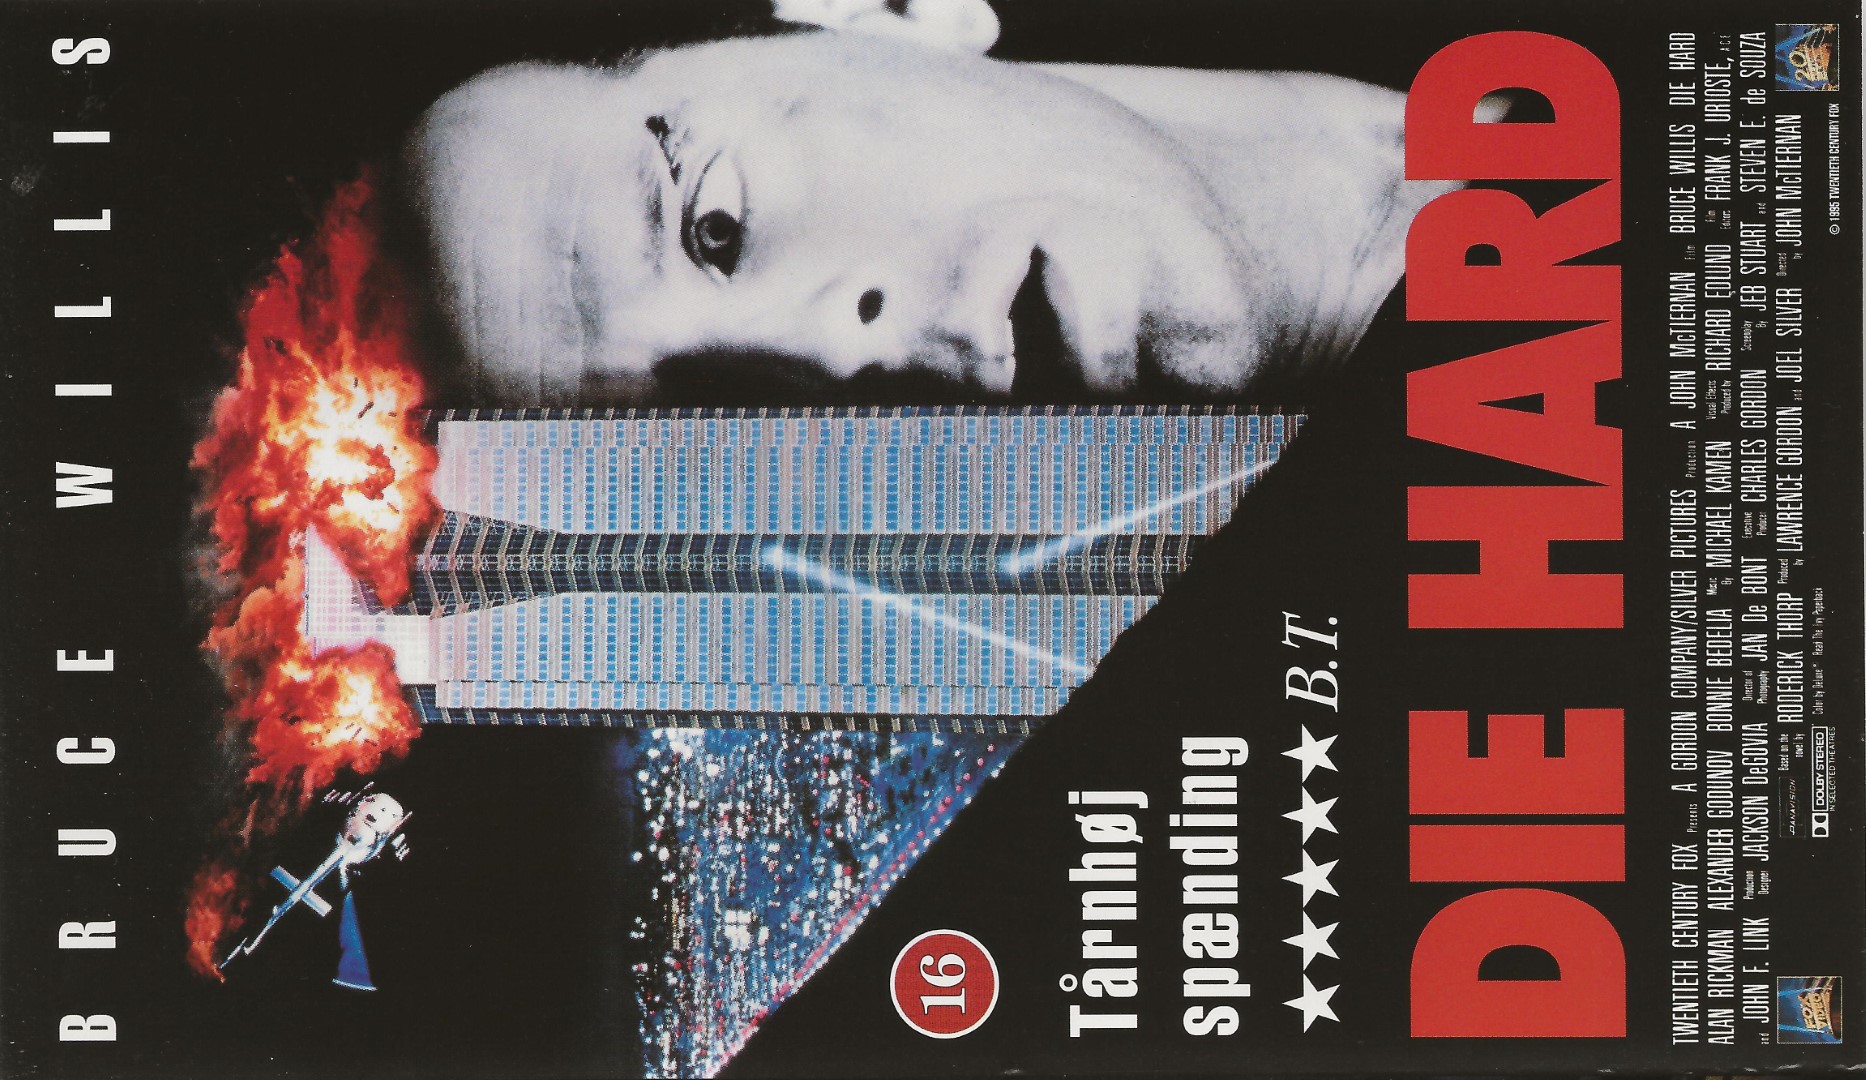 Die Hard  VHS Nordisk Film 1989